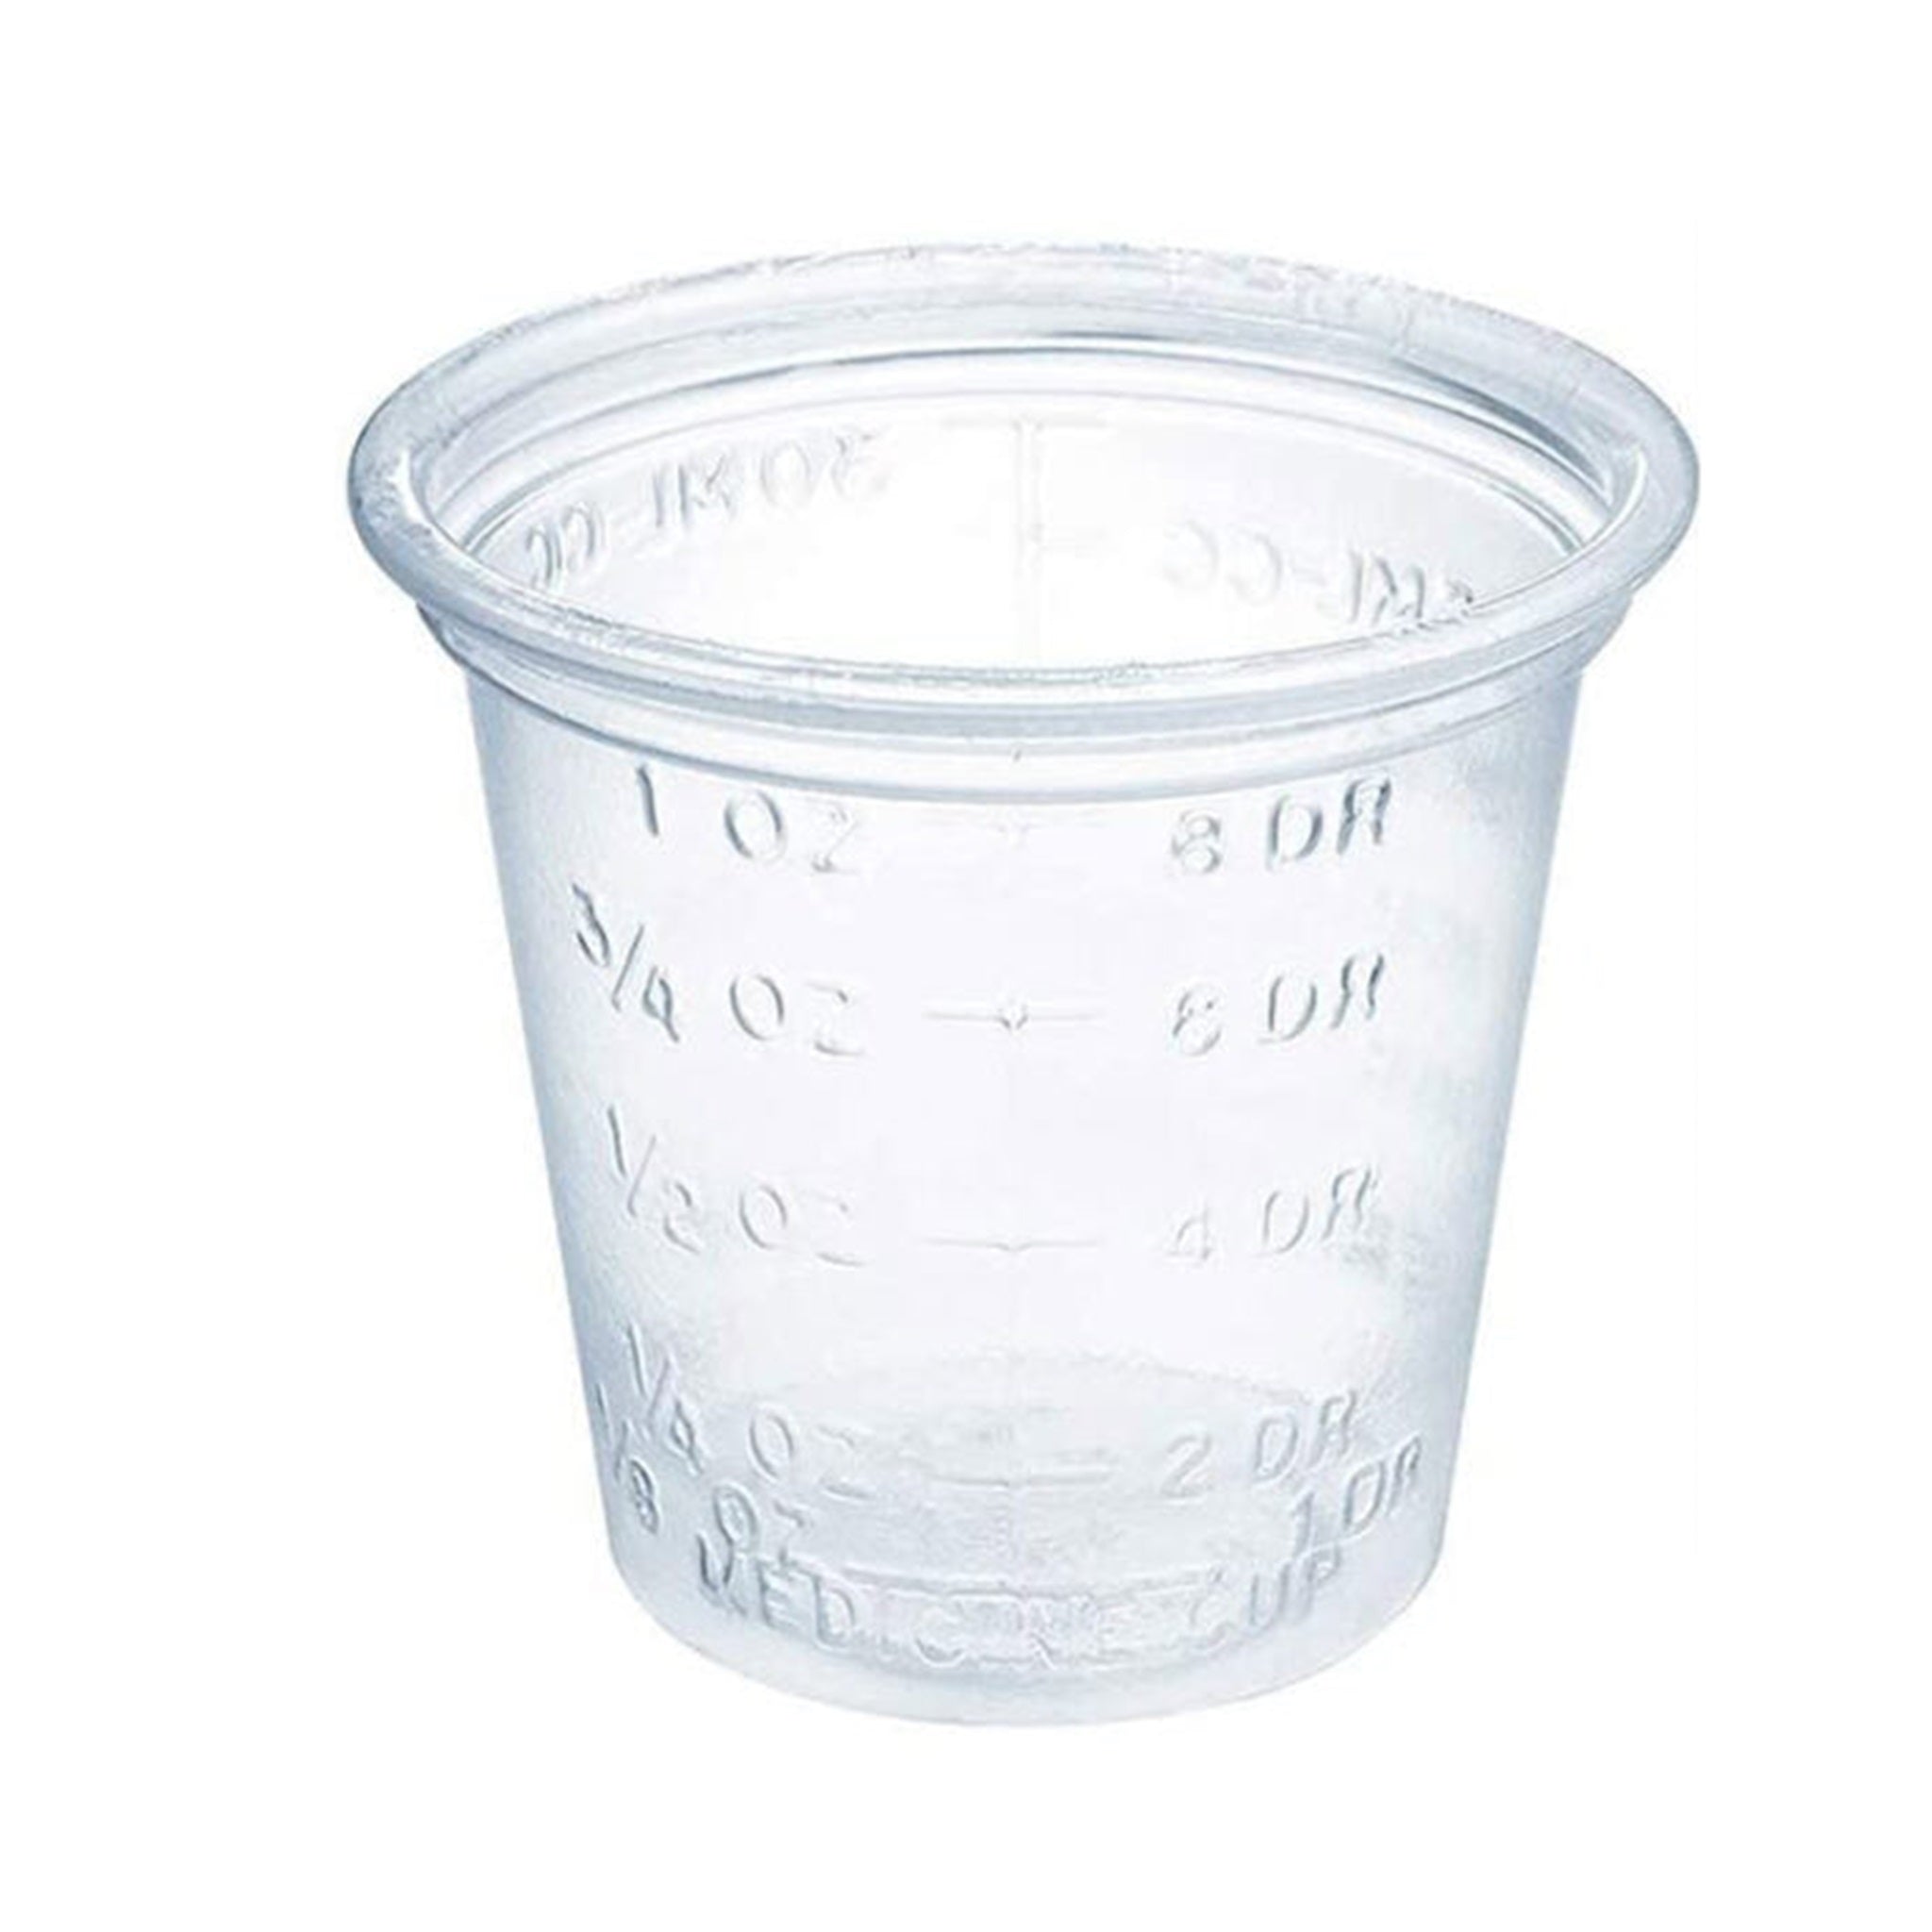 1oz Measuring Cups